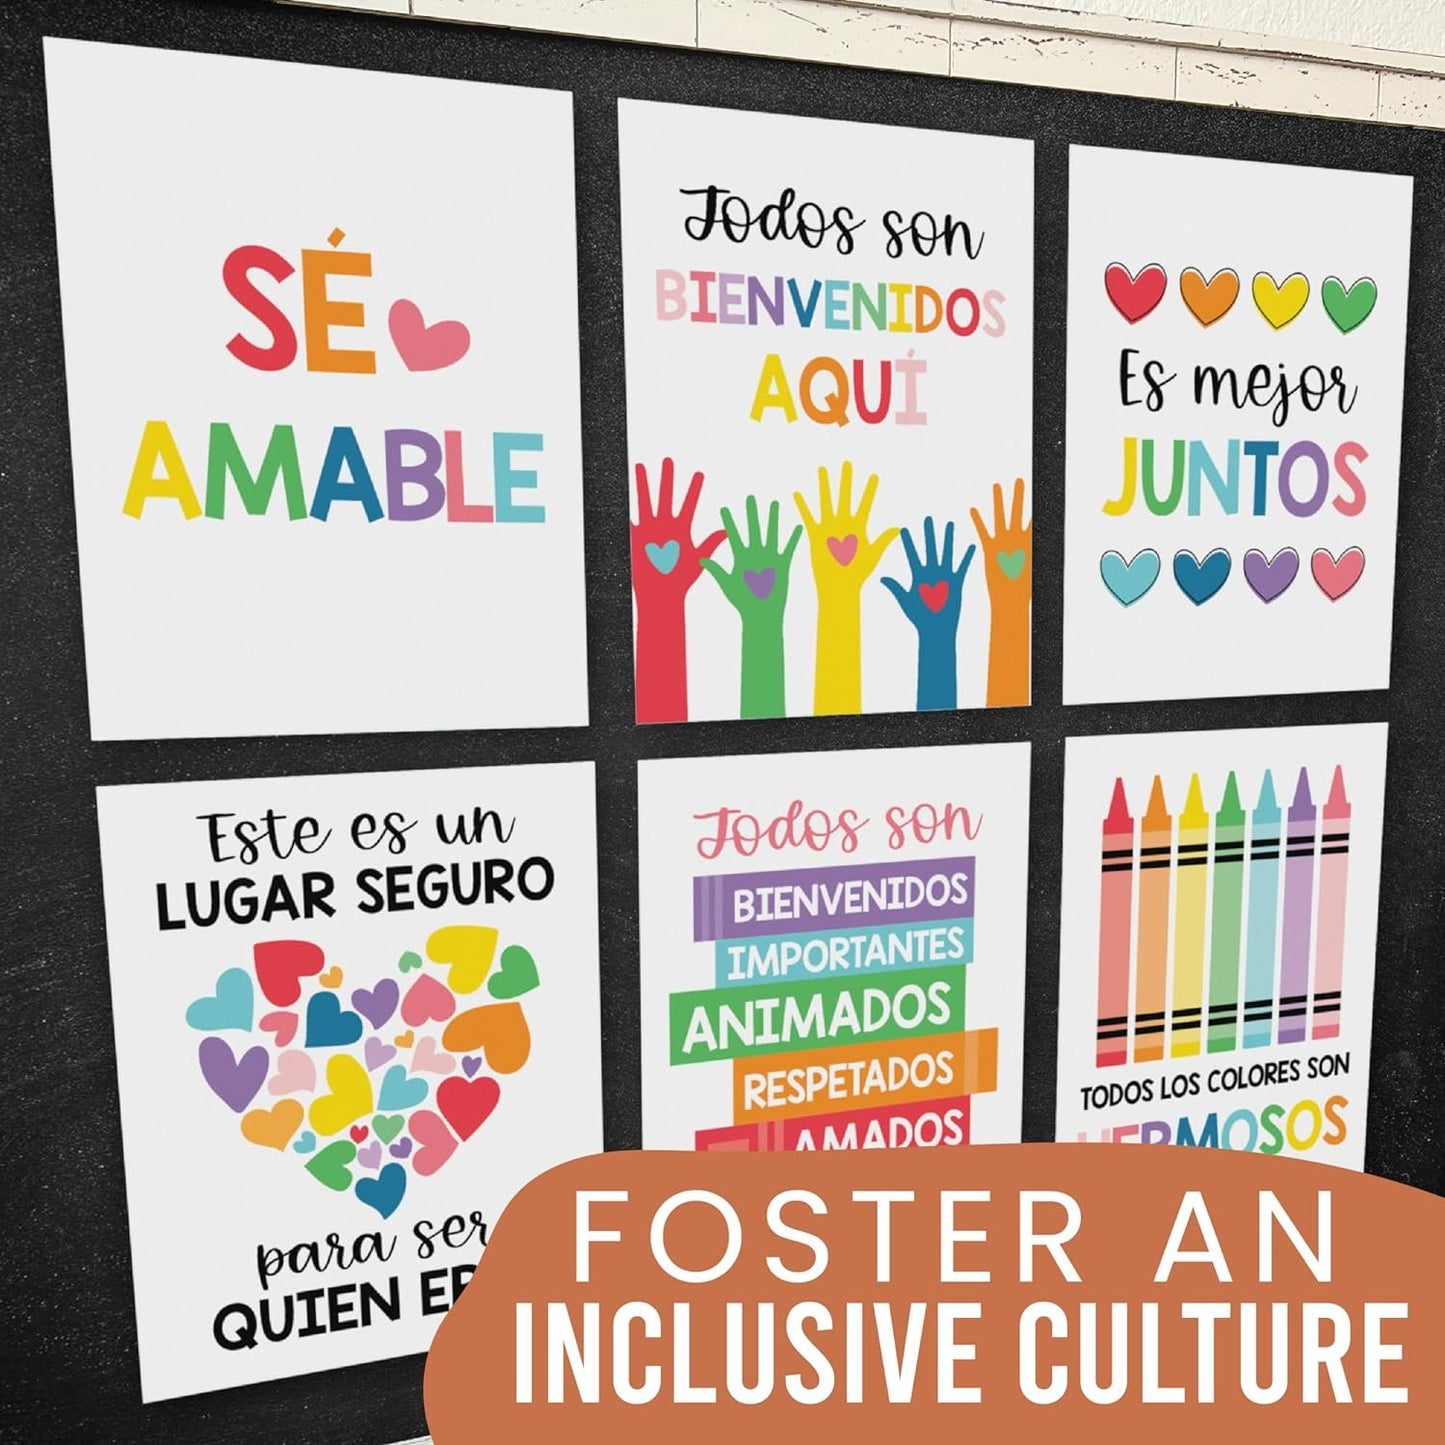 6 Colorful Spanish Classroom Decorations - Spanish Classroom Posters, Diversity Posters For Classroom Posters Español, Todos Son Bienvenidos Poster De Diversidad De Culturas, Diversidad Poster Espanol